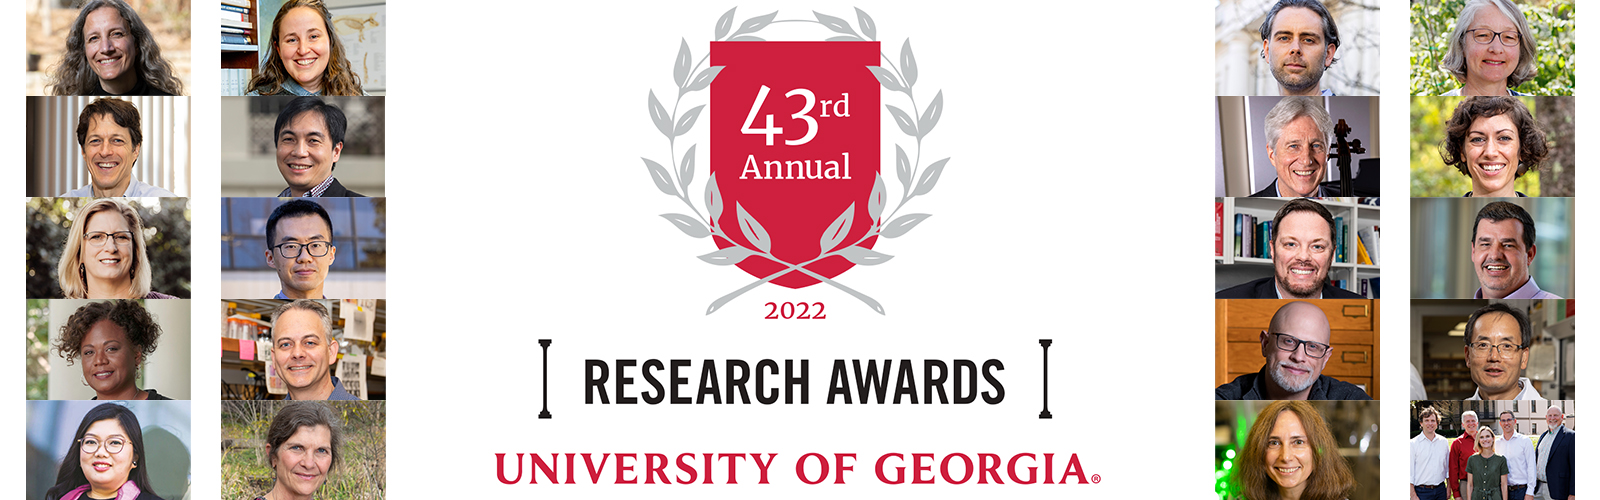 UGA Research Awards 2022